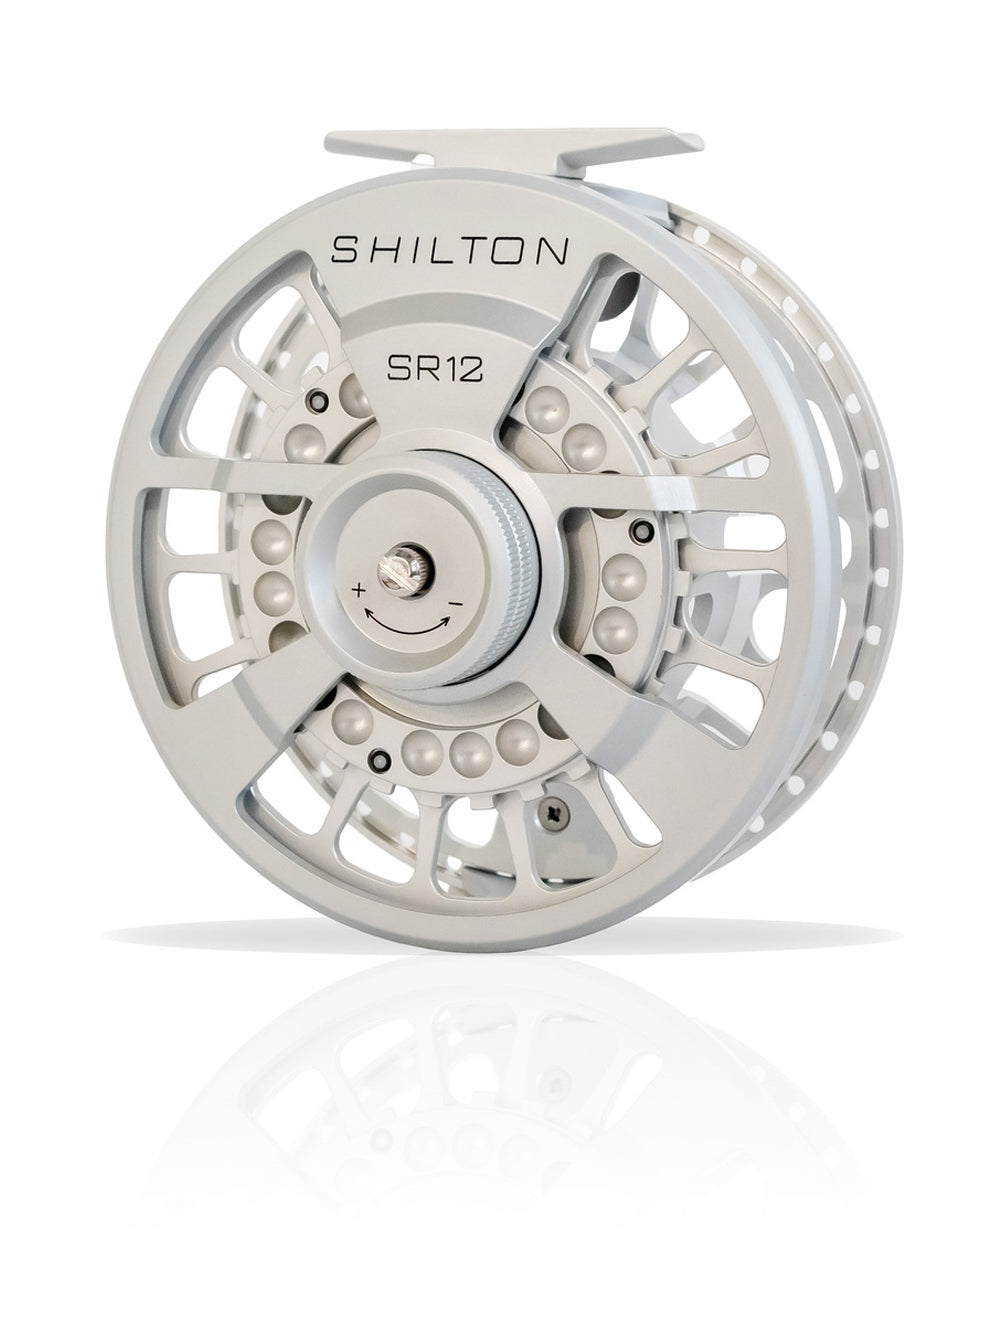 Shilton SR12 Reels (12wt+) in Titanium Silver